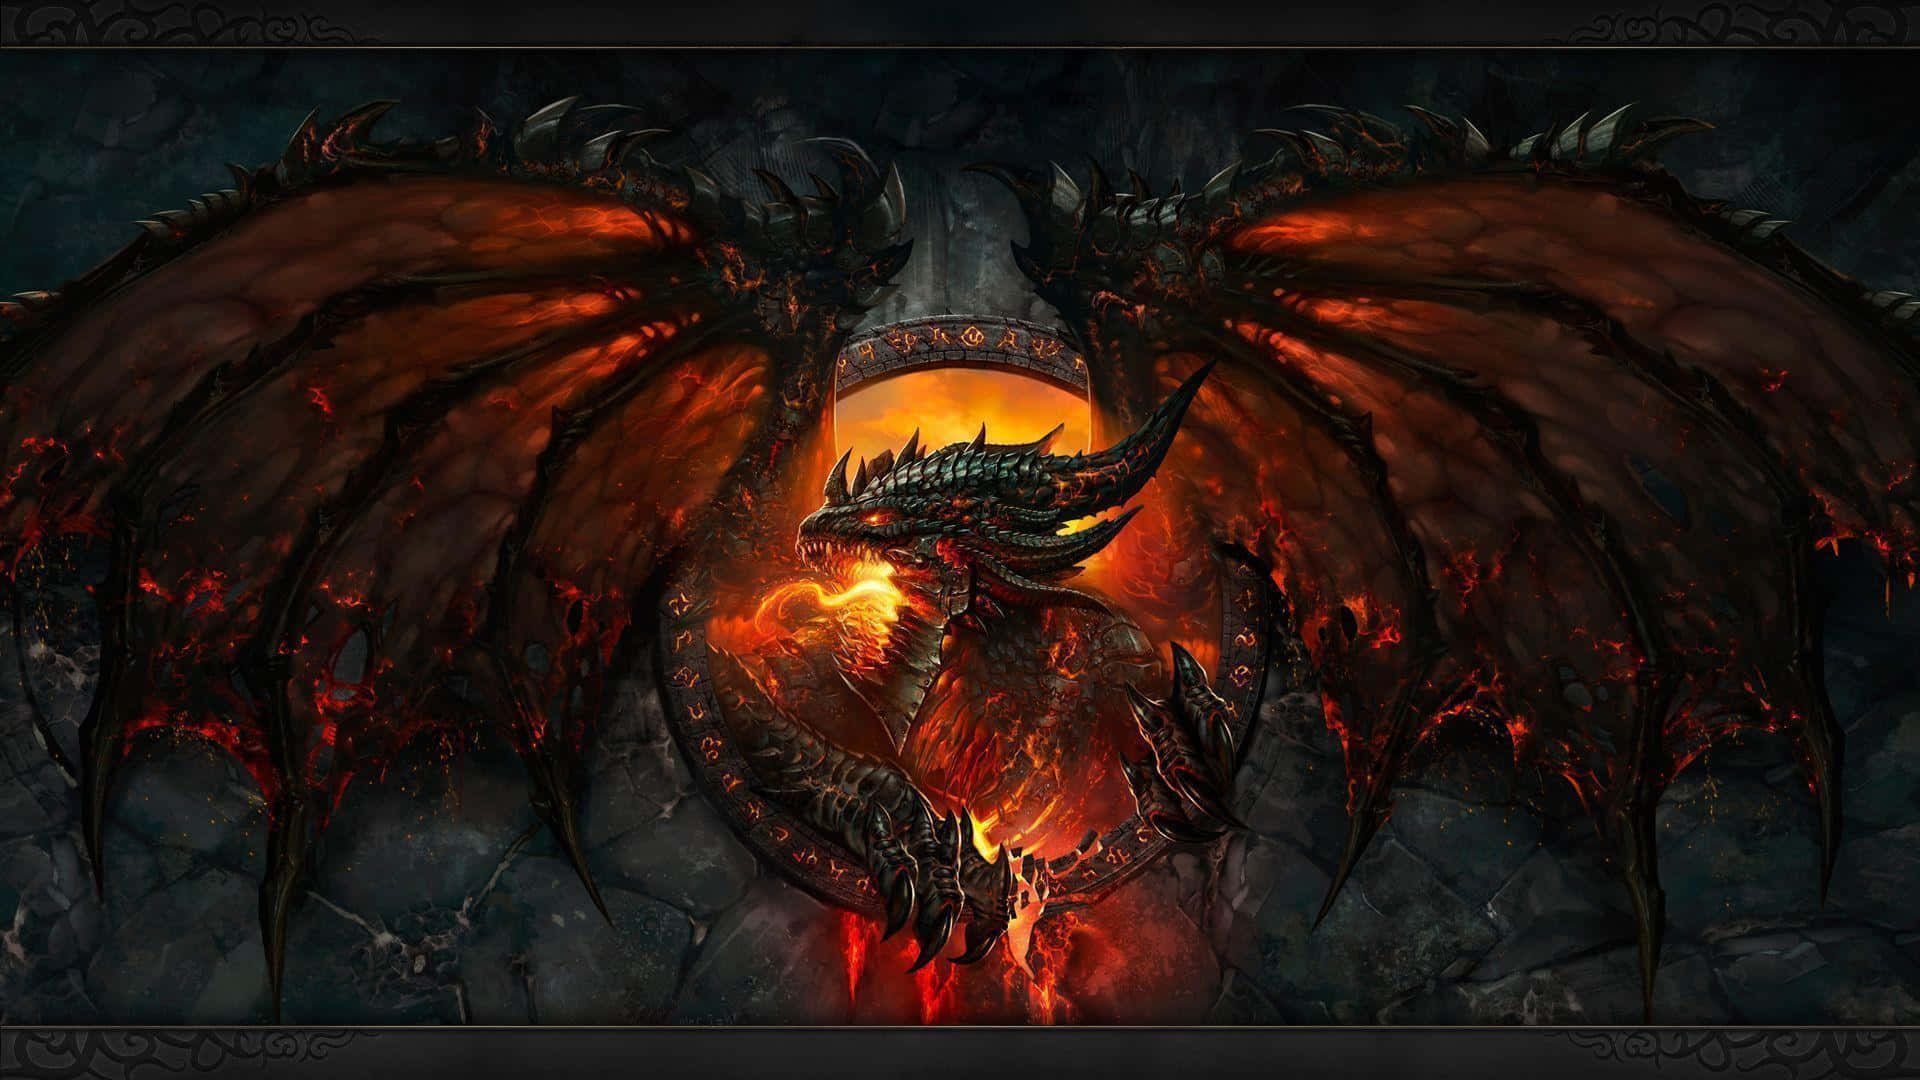 Epic Battle Scene In World Of Warcraft: Cataclysm Wallpaper